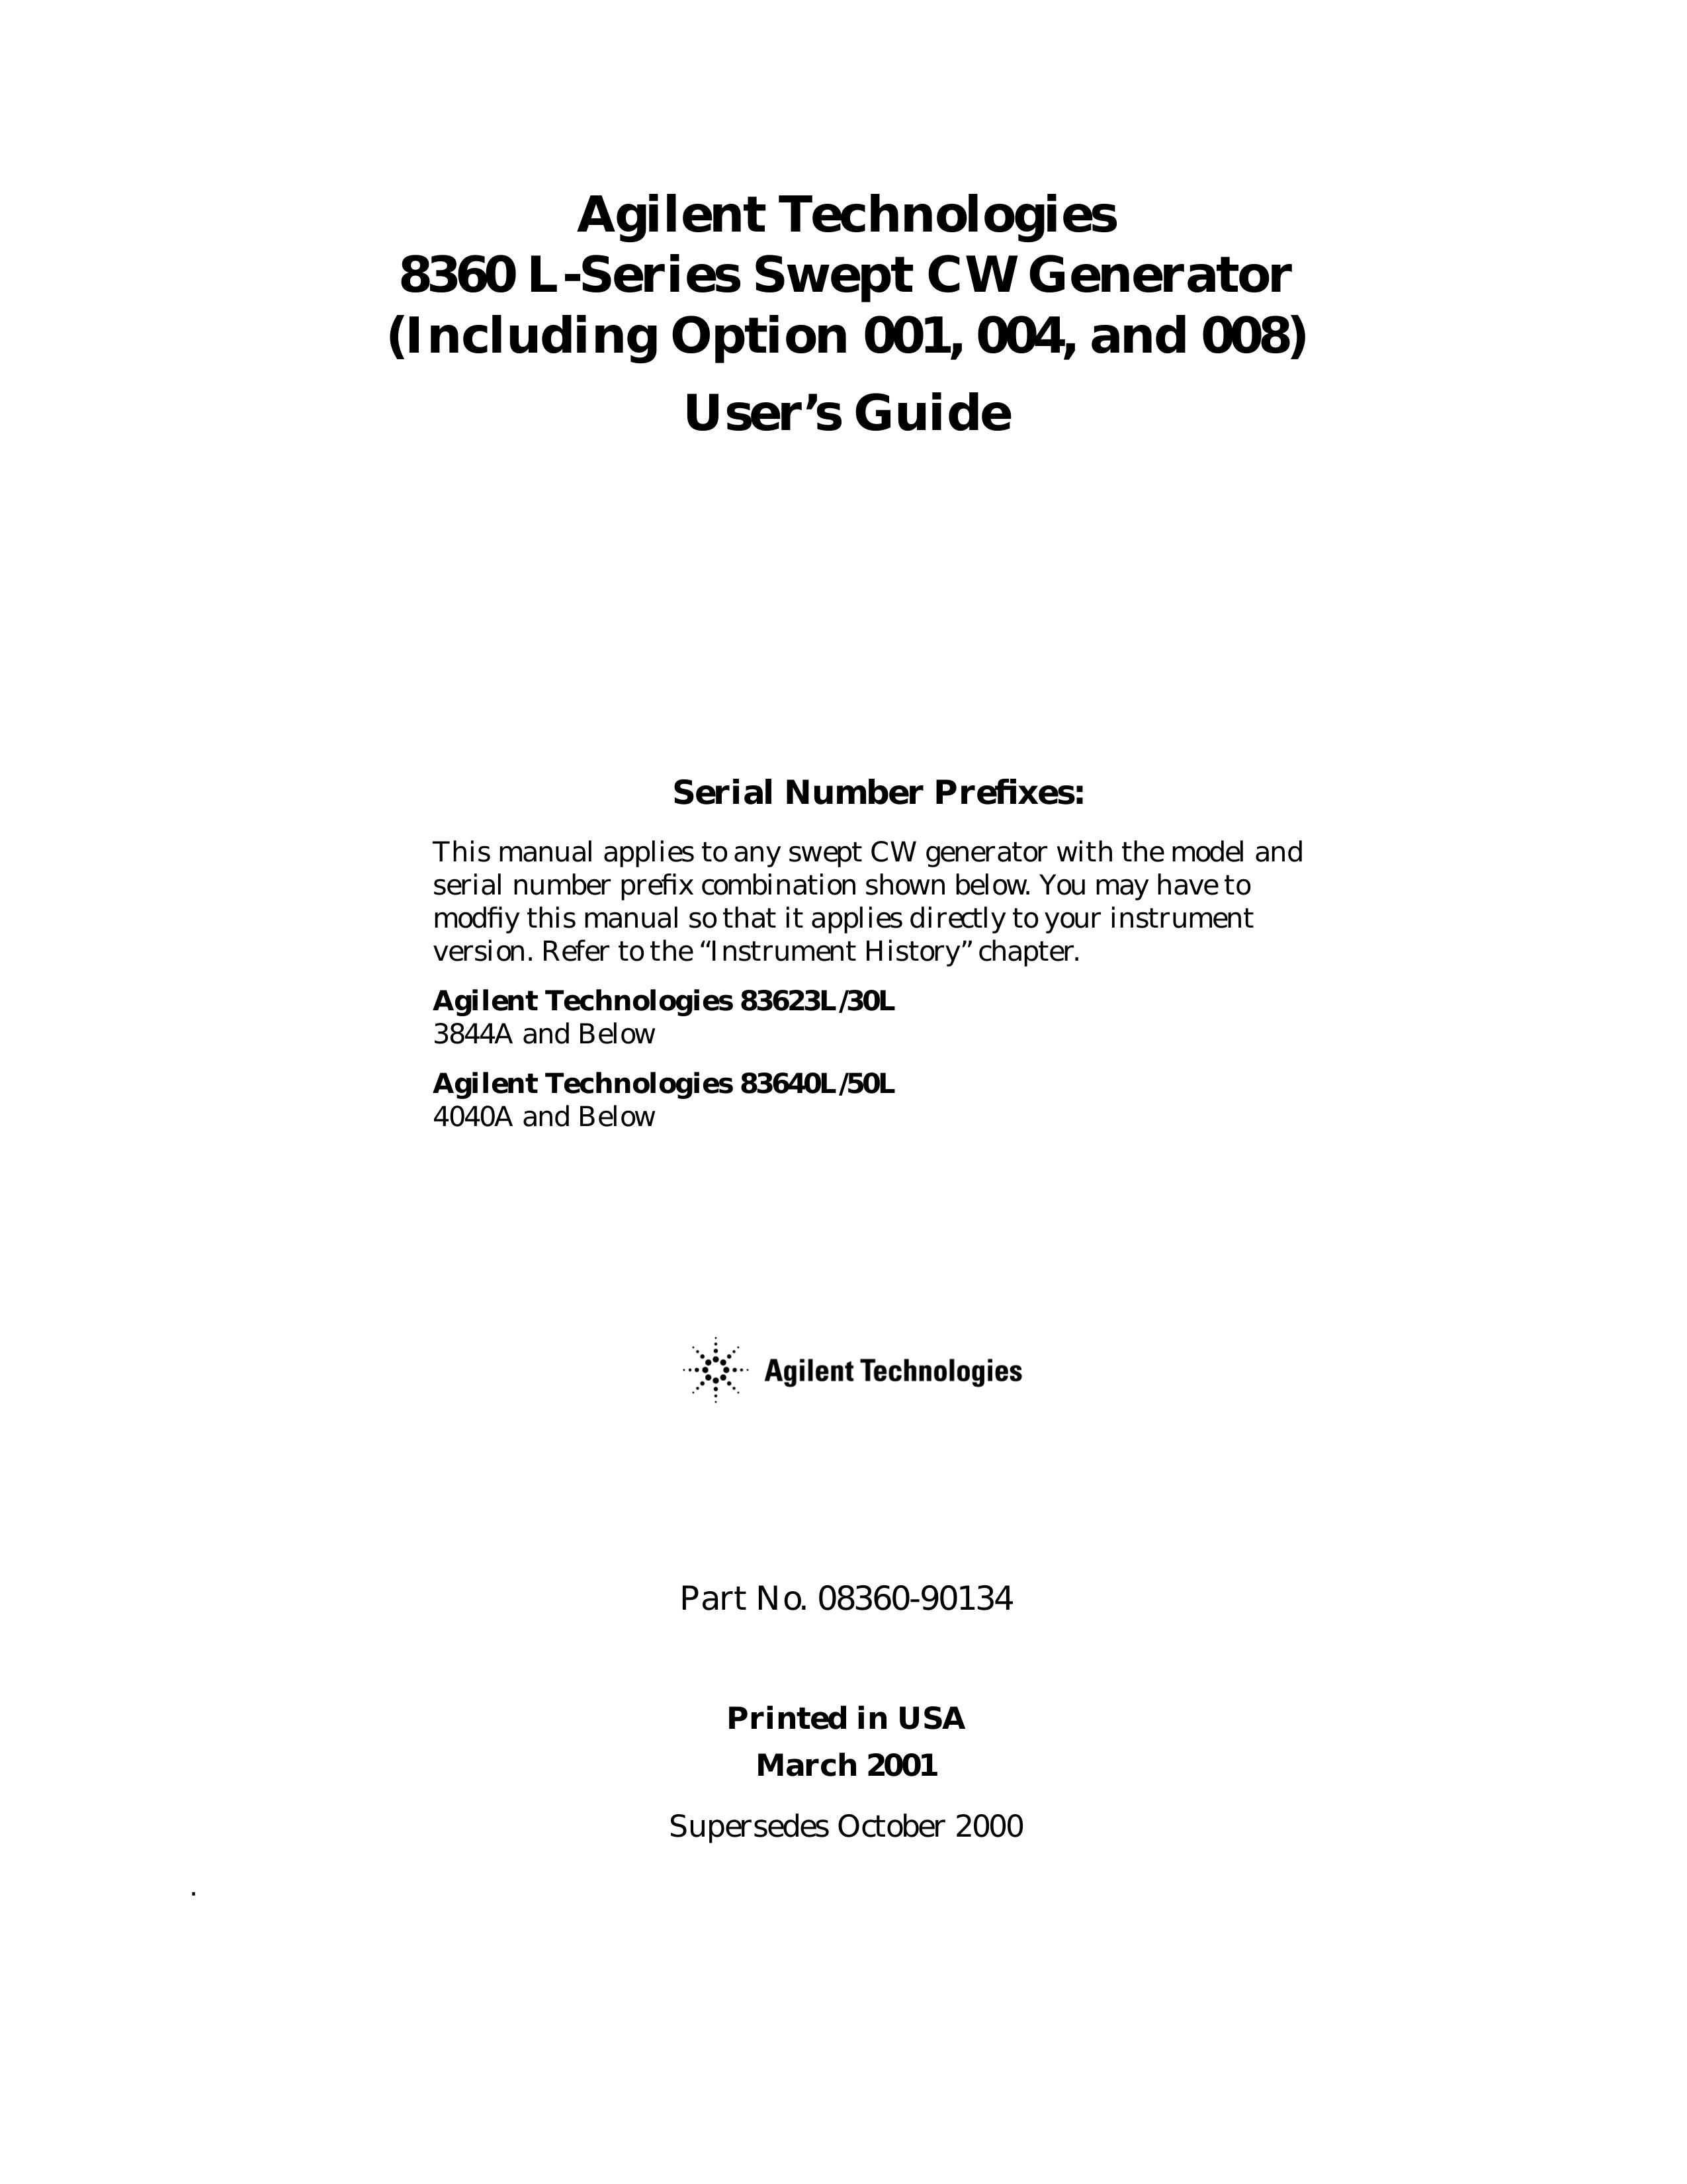 Agilent Technologies 8360 Portable Generator User Manual